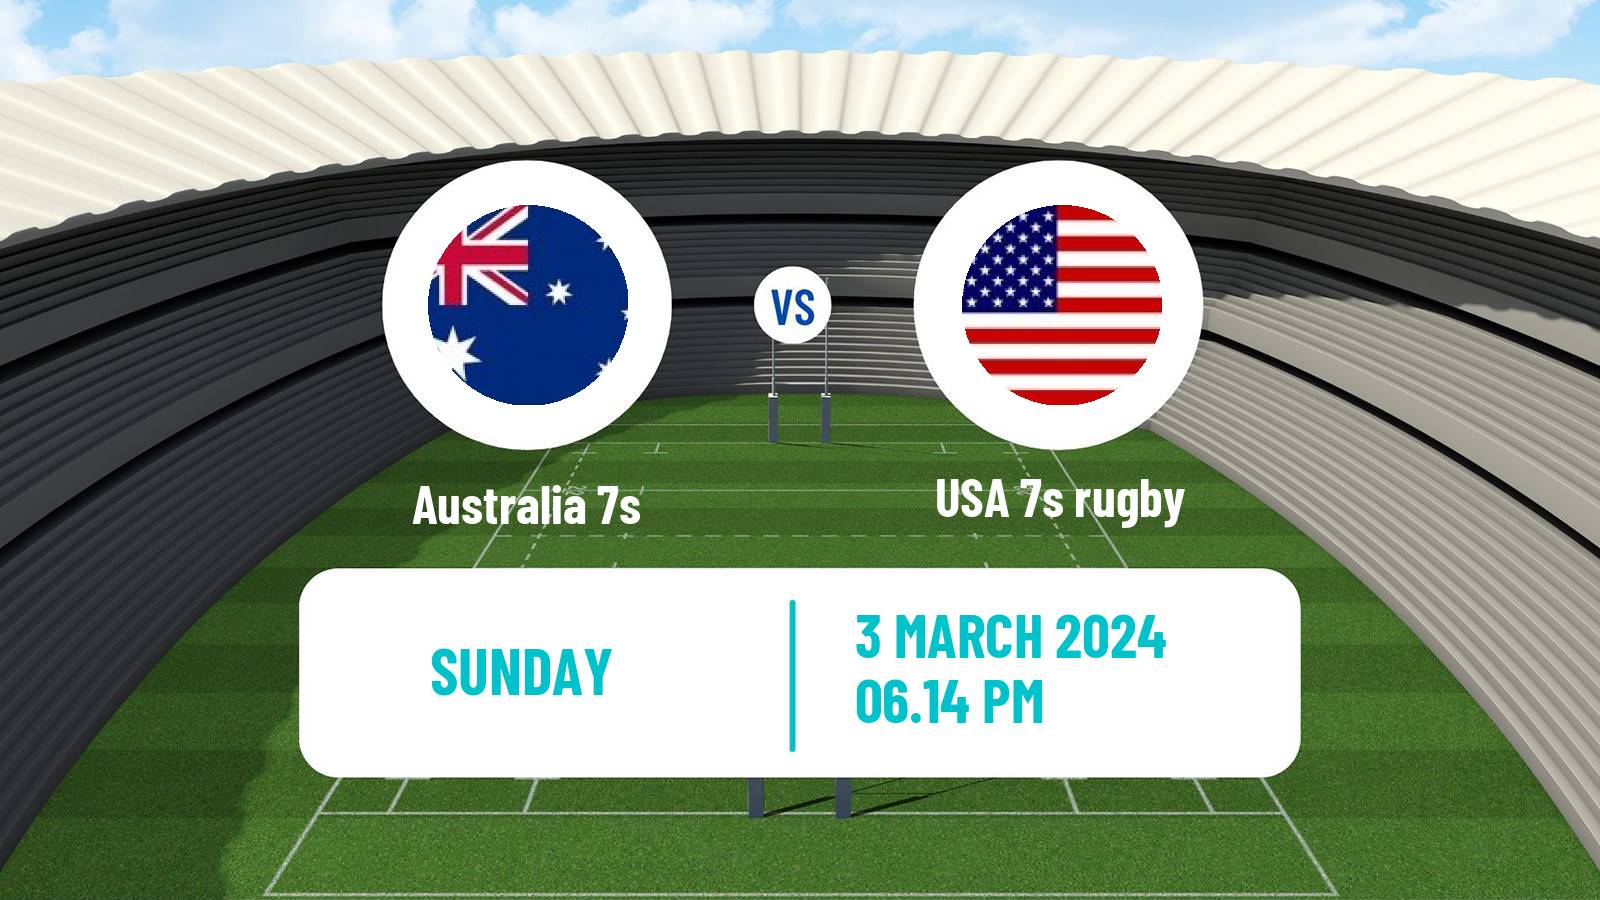 Rugby union Sevens World Series - USA Australia 7s - USA 7s